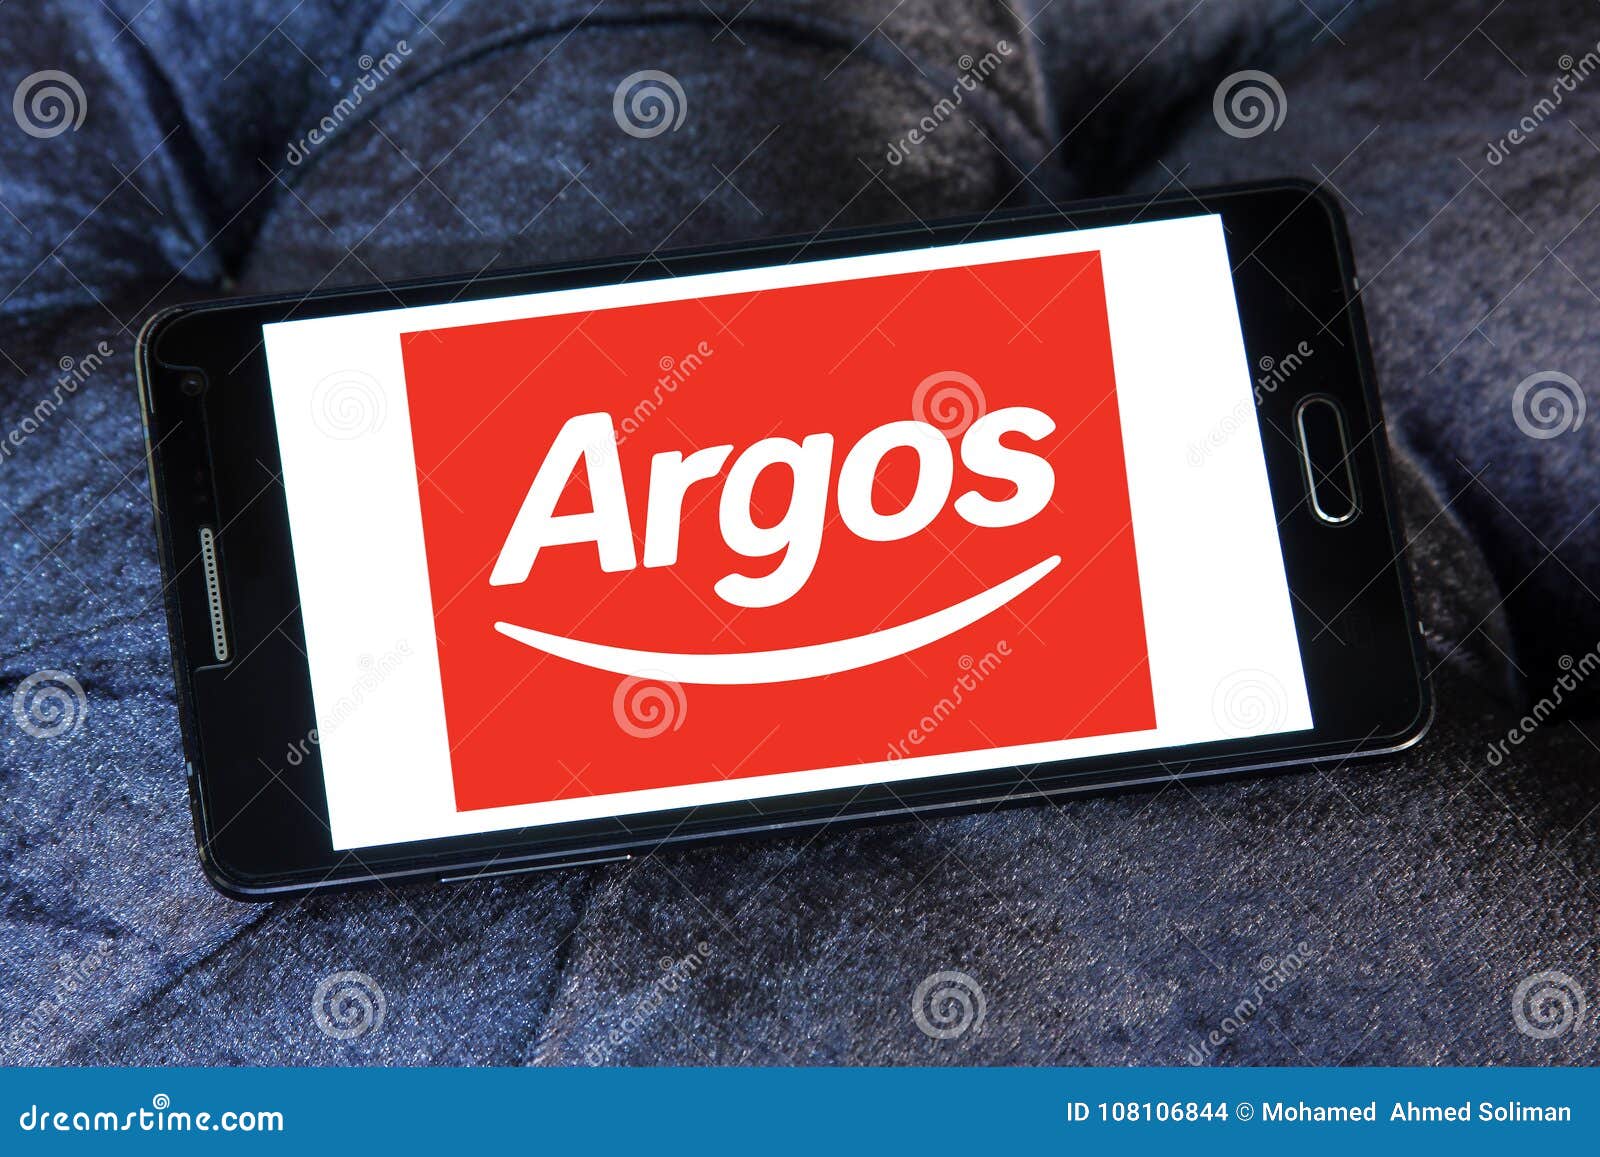 Argos retailer logo editorial stock image. Image of illustrative - 108106844